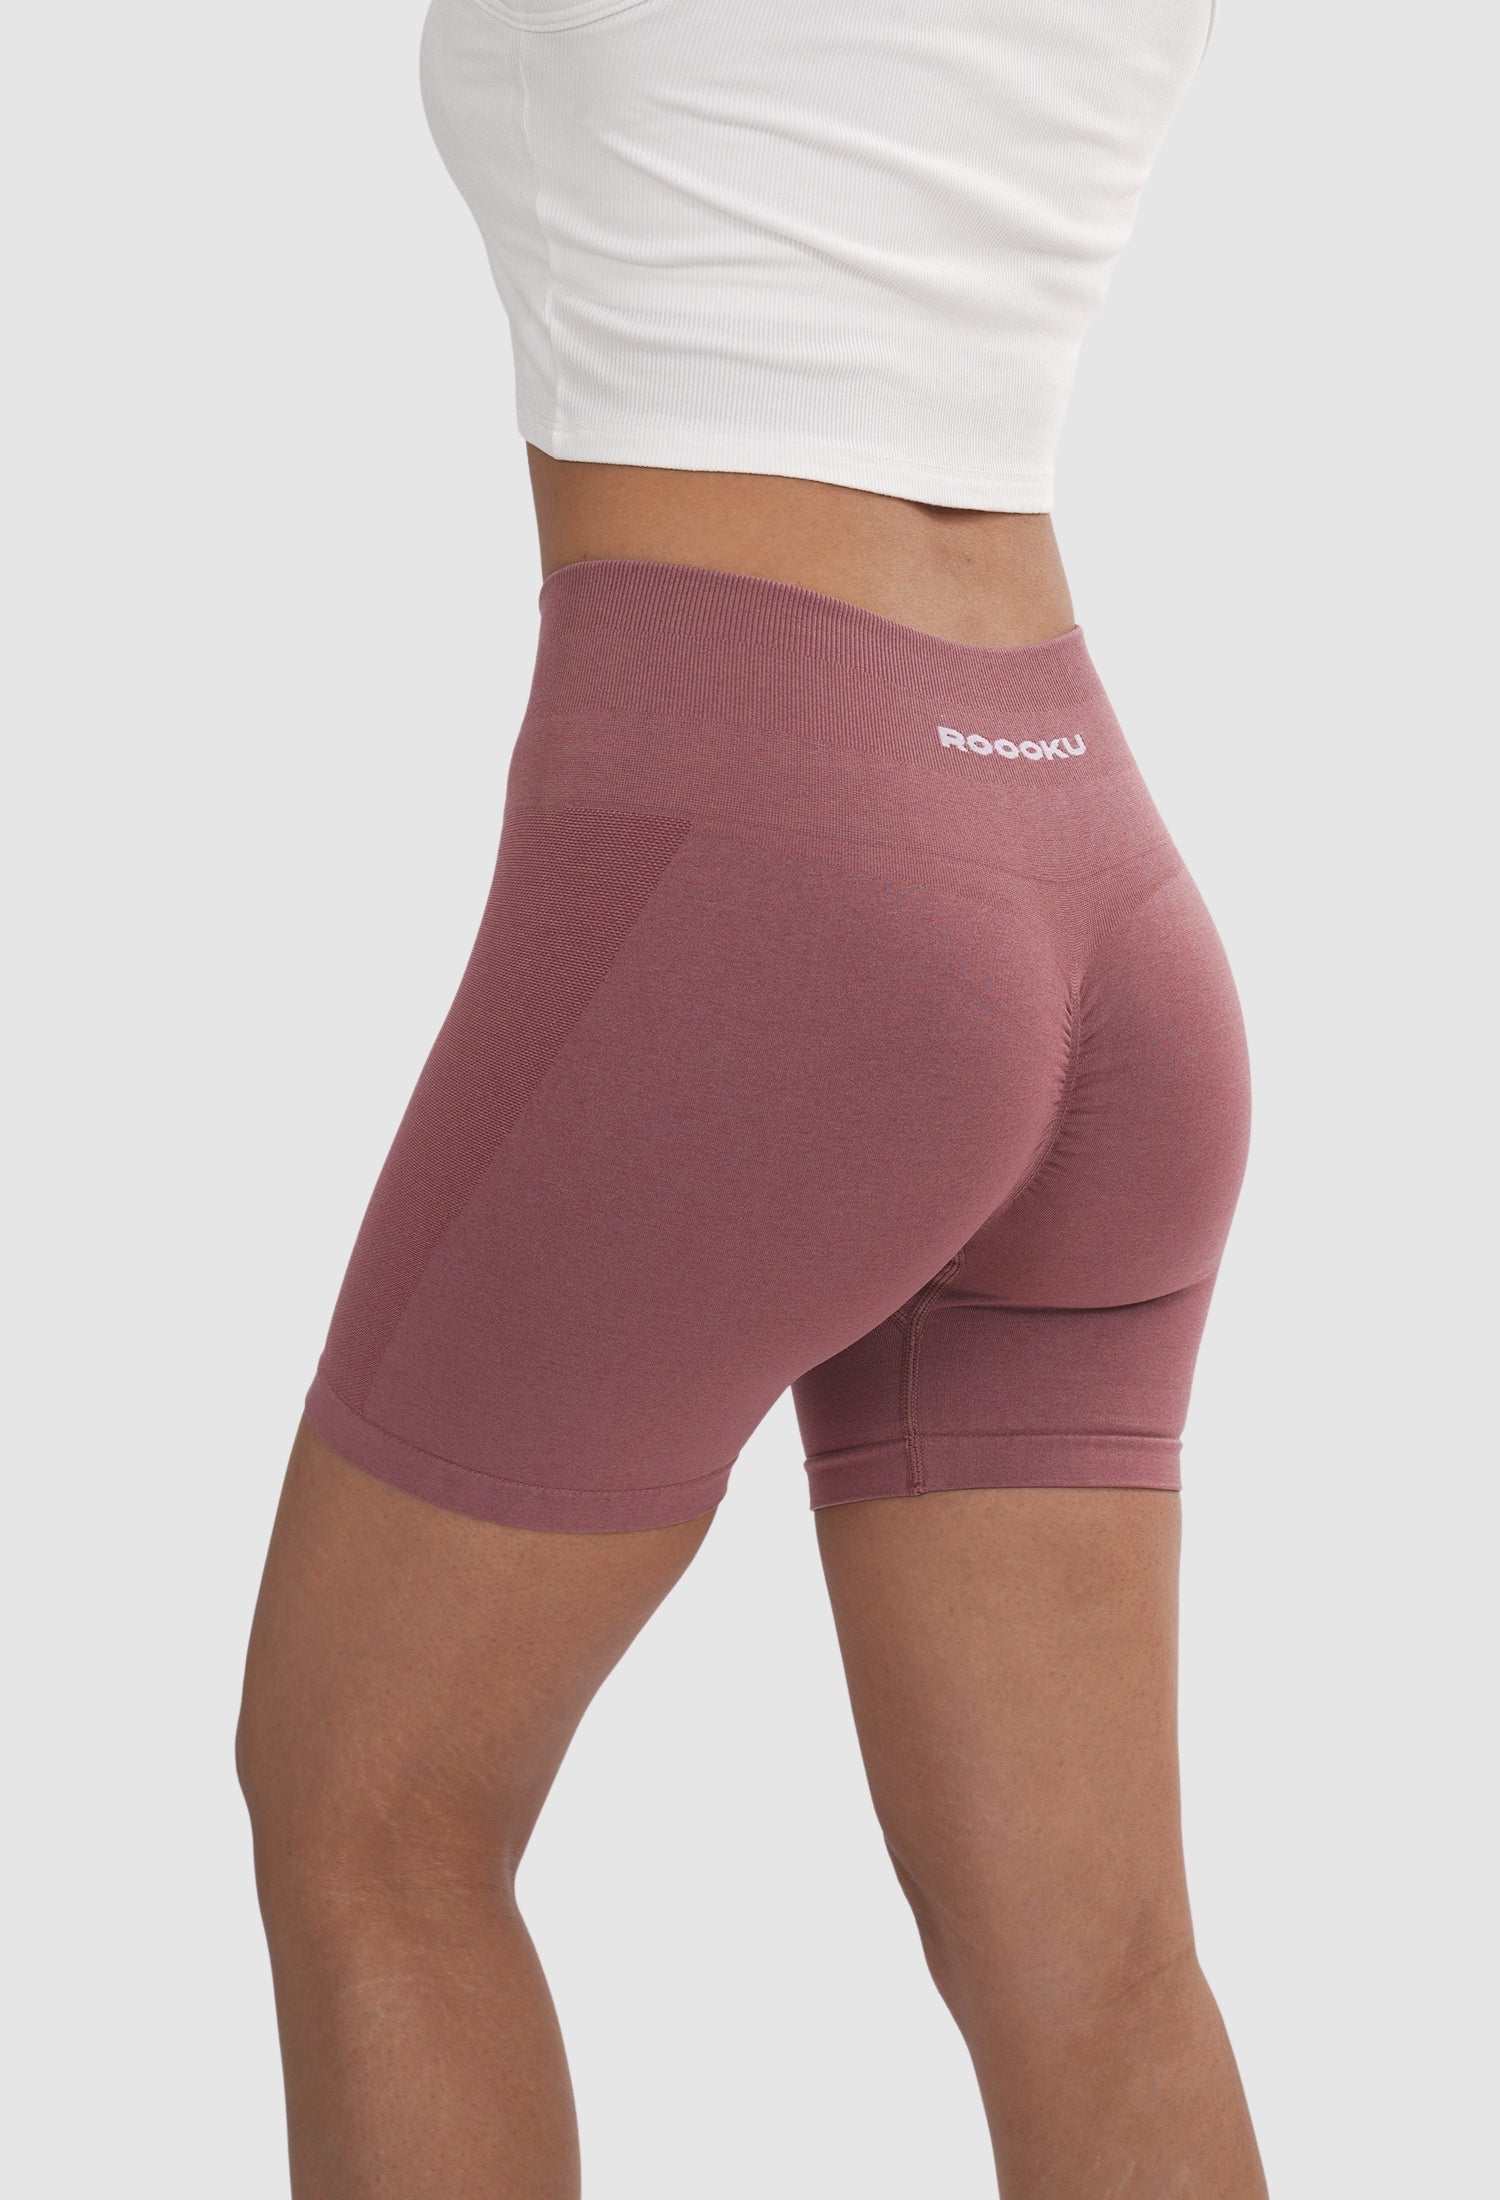  CFR Women Athletic Shorts Scrunch Butt Lifting High Waist  Workout Sport Compression Gym Fitness Summer Shorts Hot Pants B1-Black